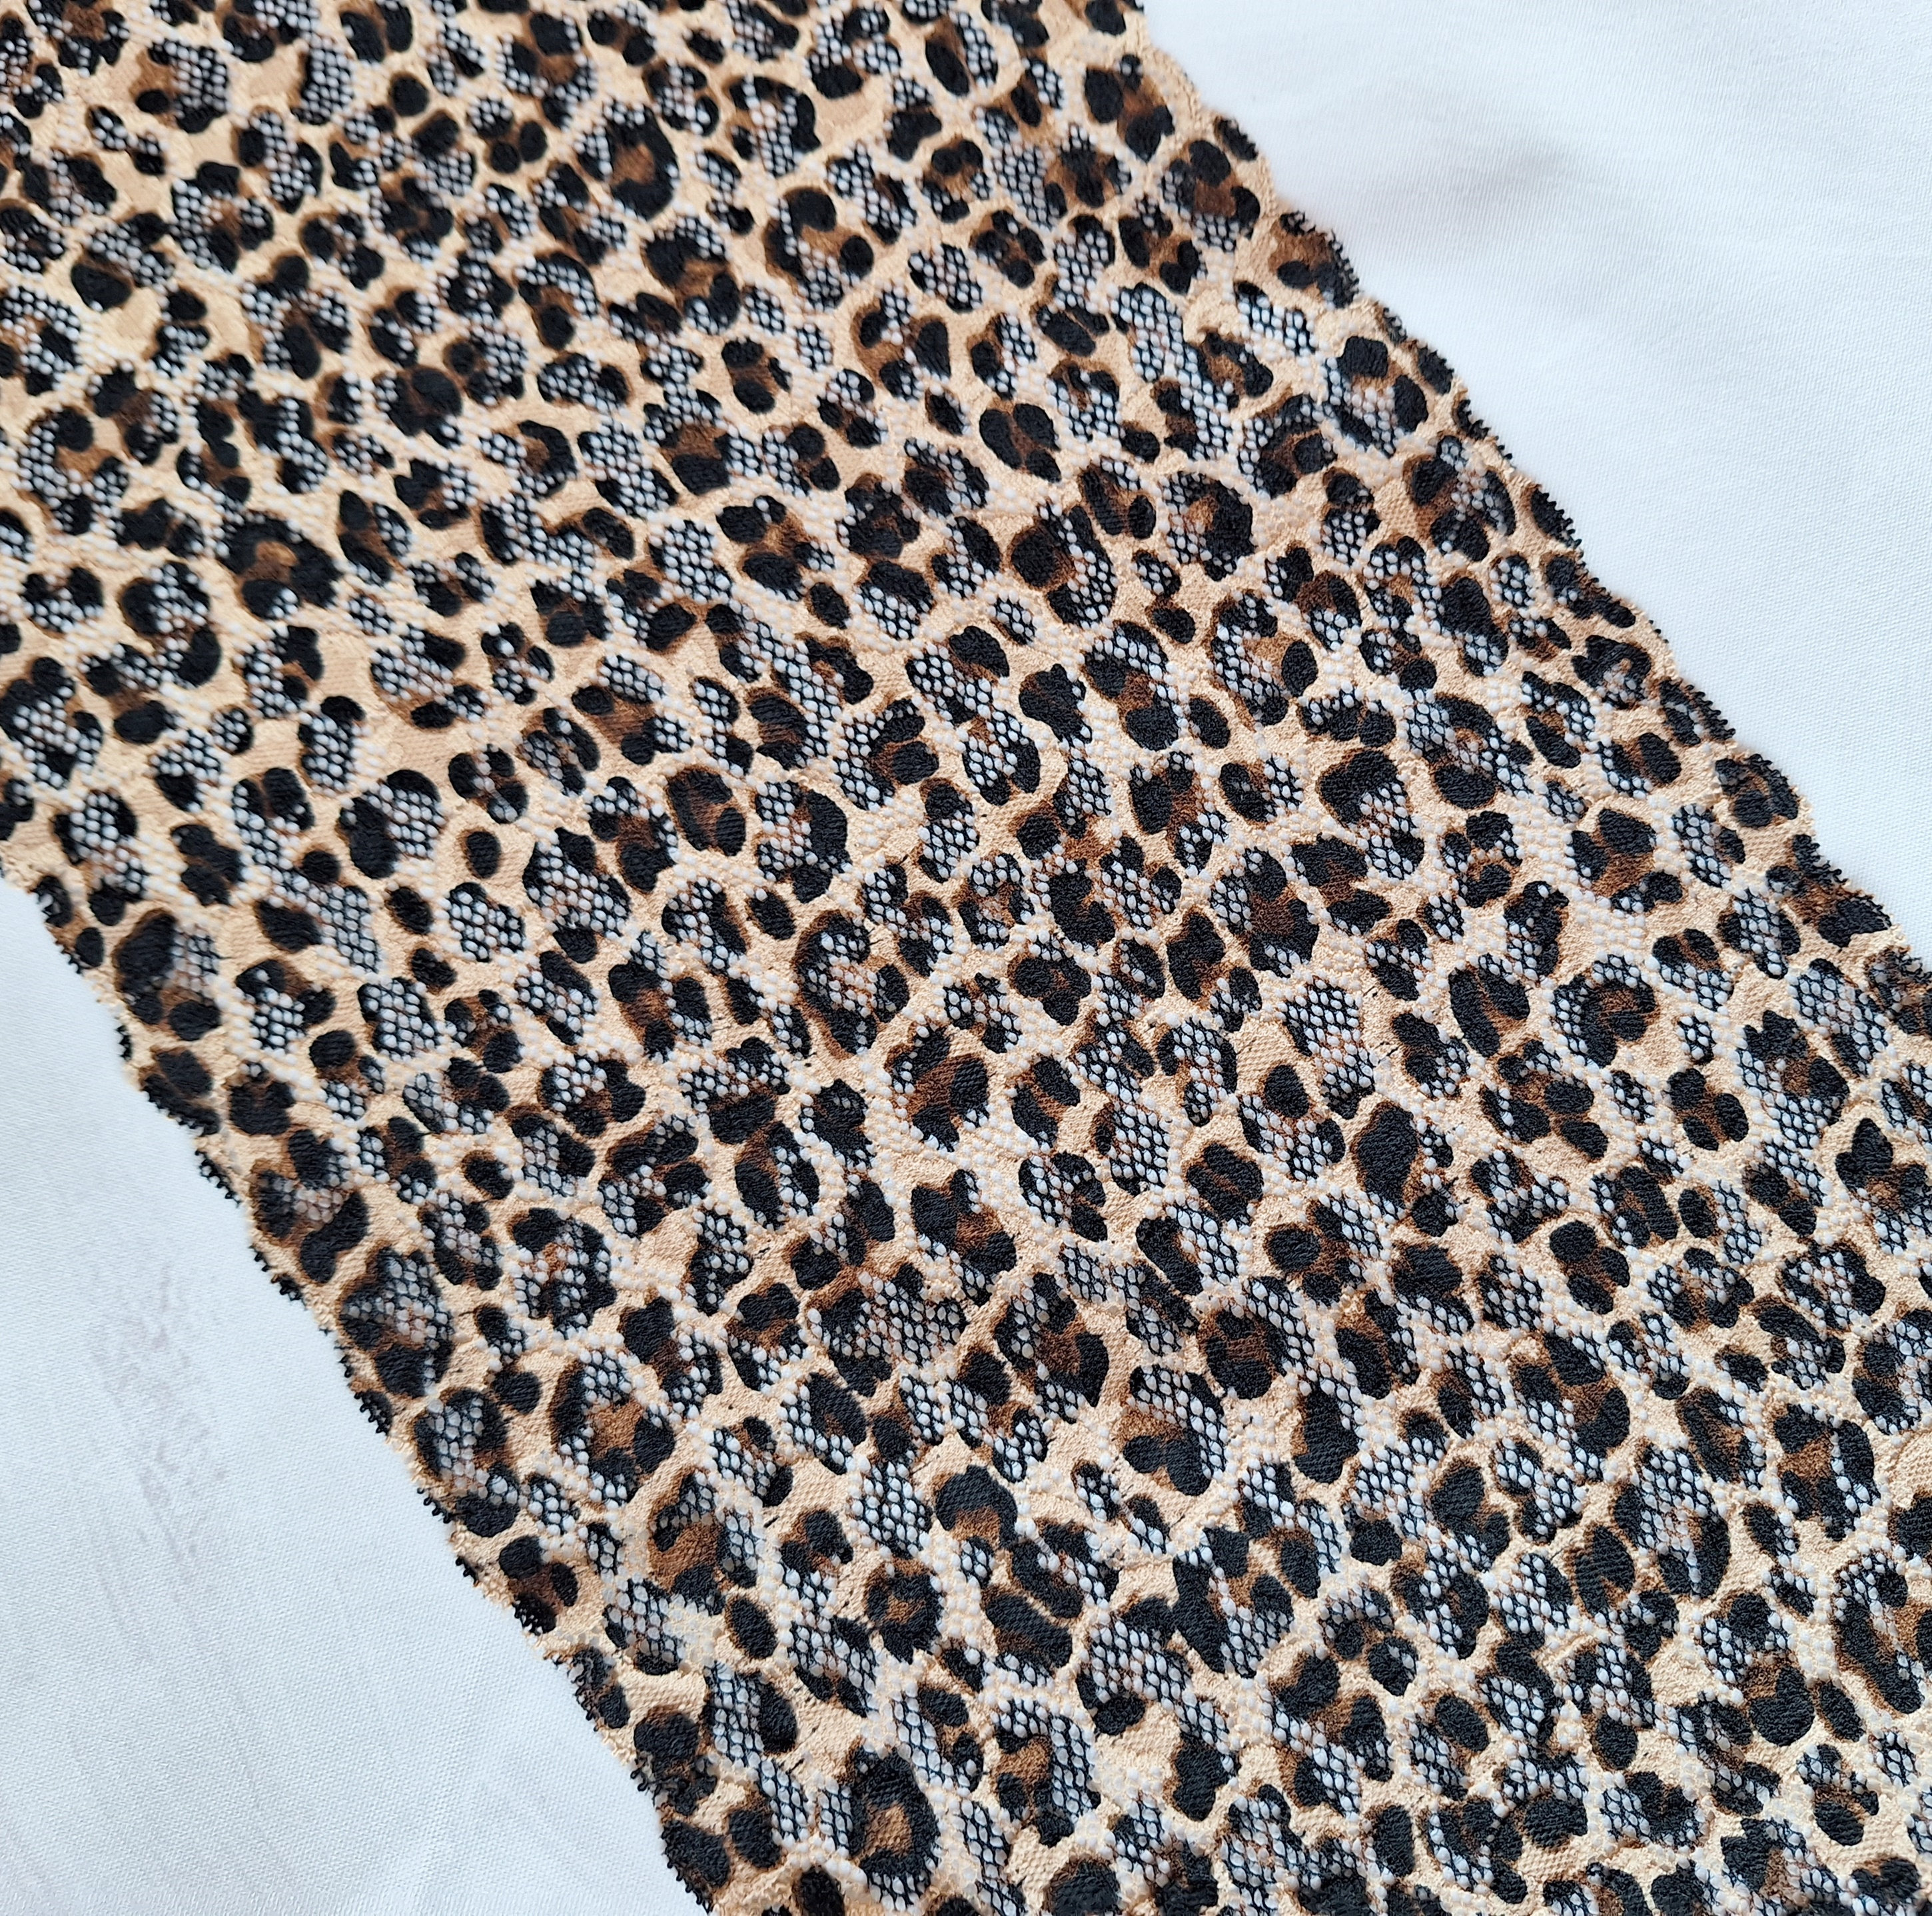 Leopard Print Stretch Lace Trim, Cheetah Print Elastic Lace, Panthera  Printed Lace Fabric Width 22 Cm / 8.6, Nr 798 